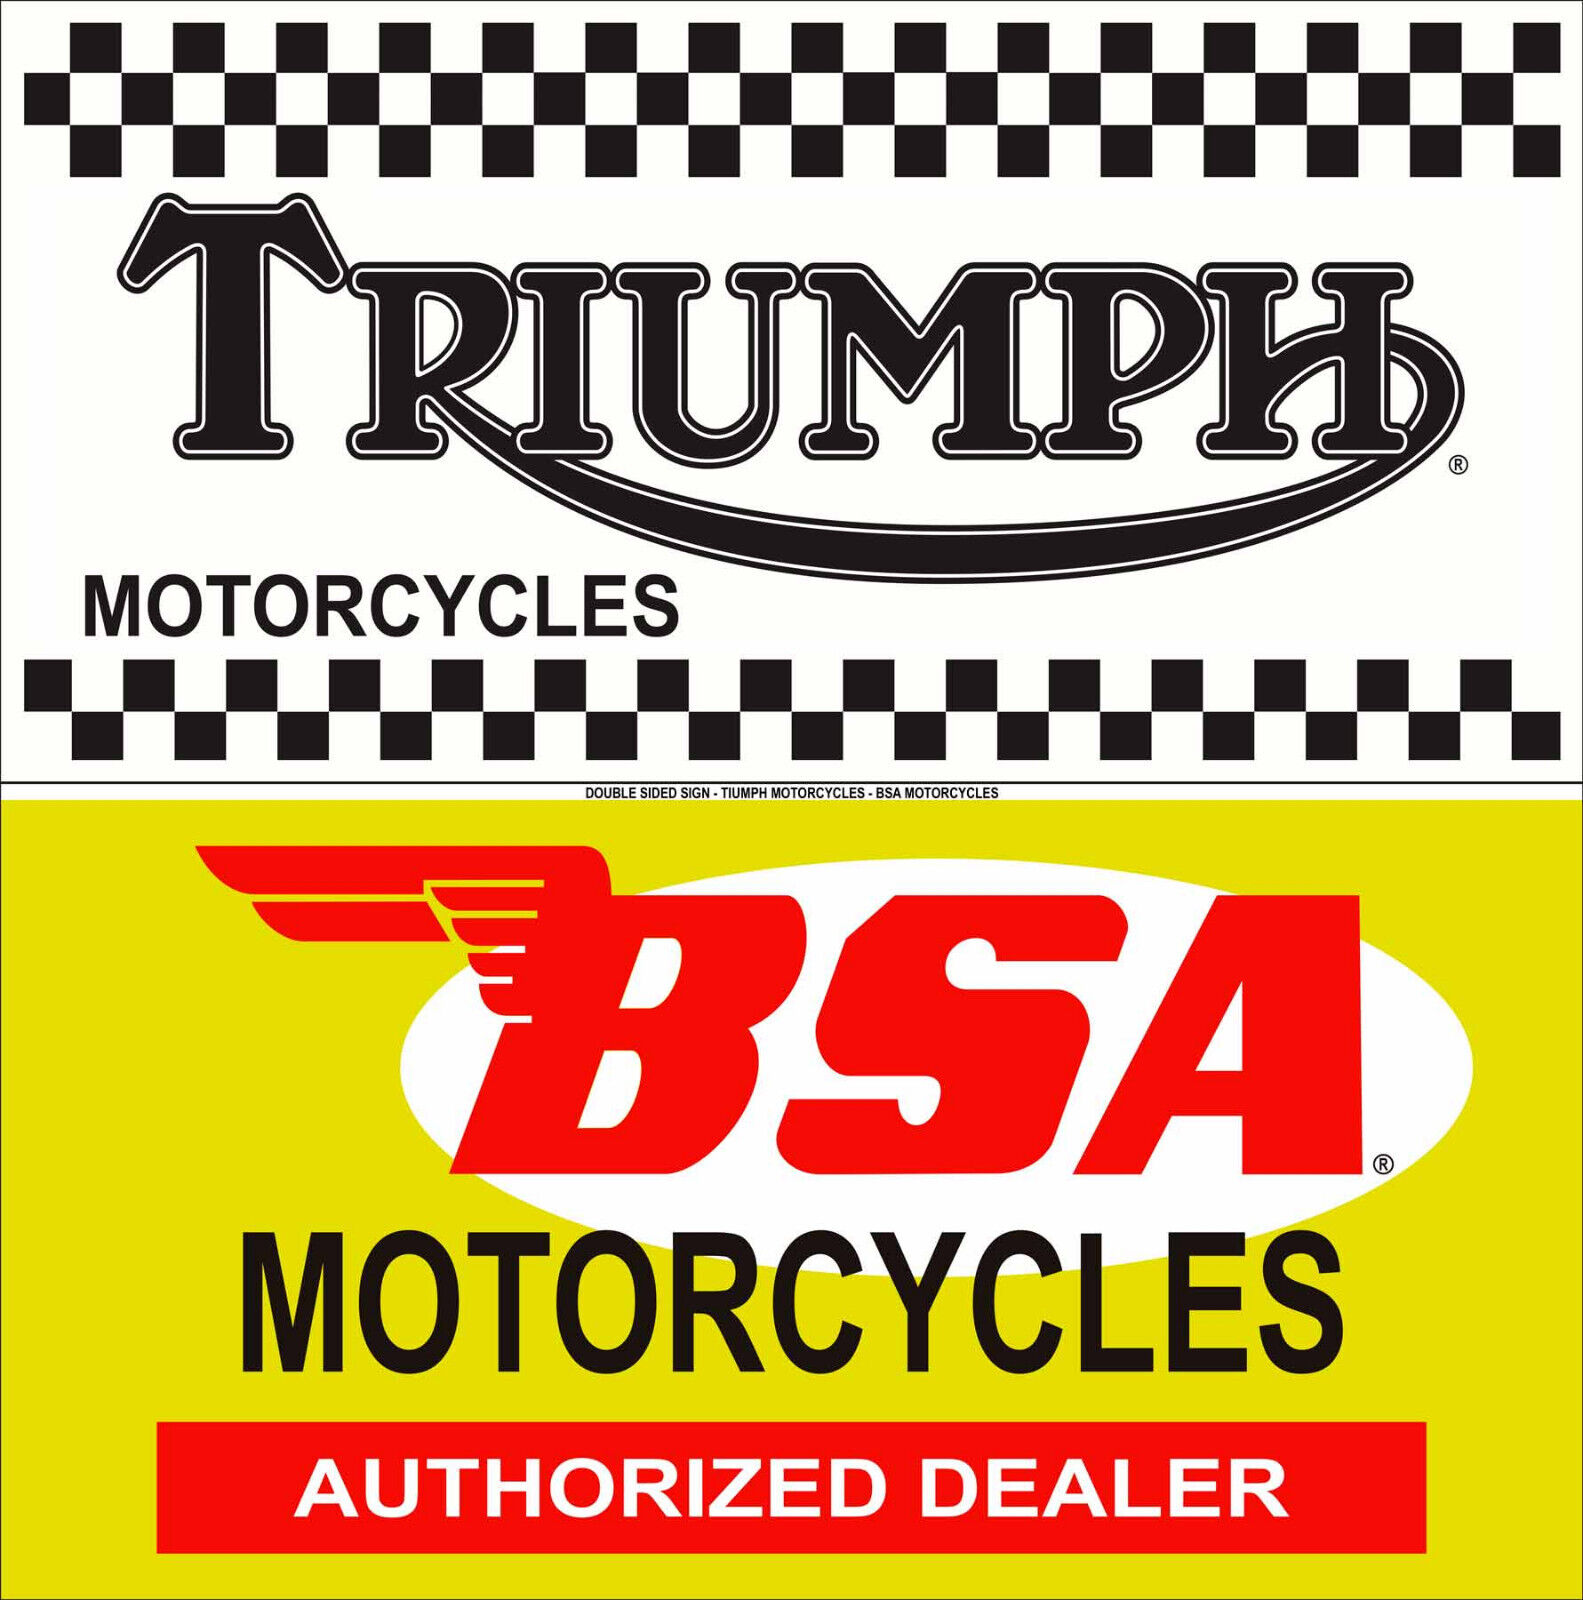 TRIUMPH BSA MOTORCYCLES 24